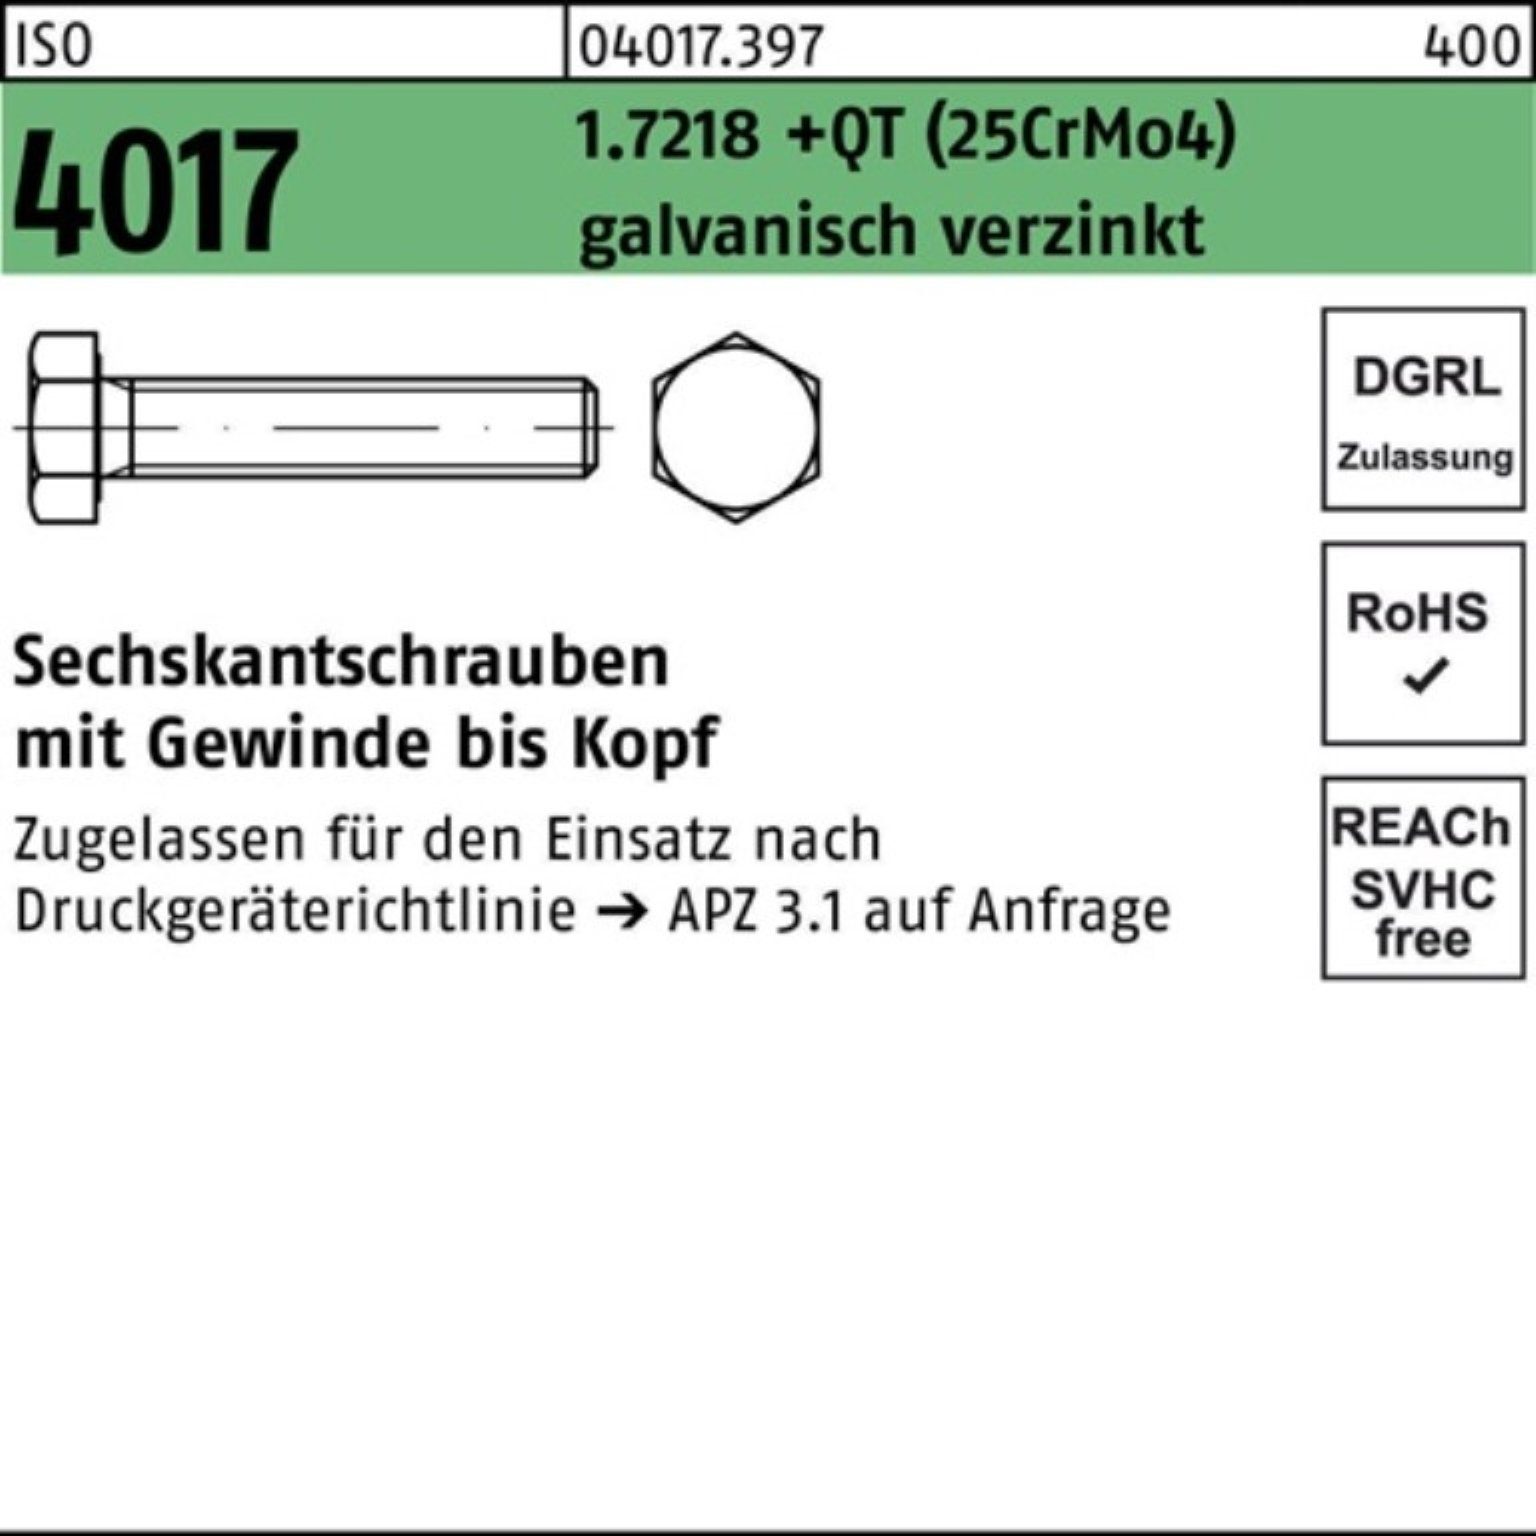 1.7218 g ISO M12x70 Bufab Sechskantschraube VG Sechskantschraube Pack 100er +QT 4017 (25CrMo4)